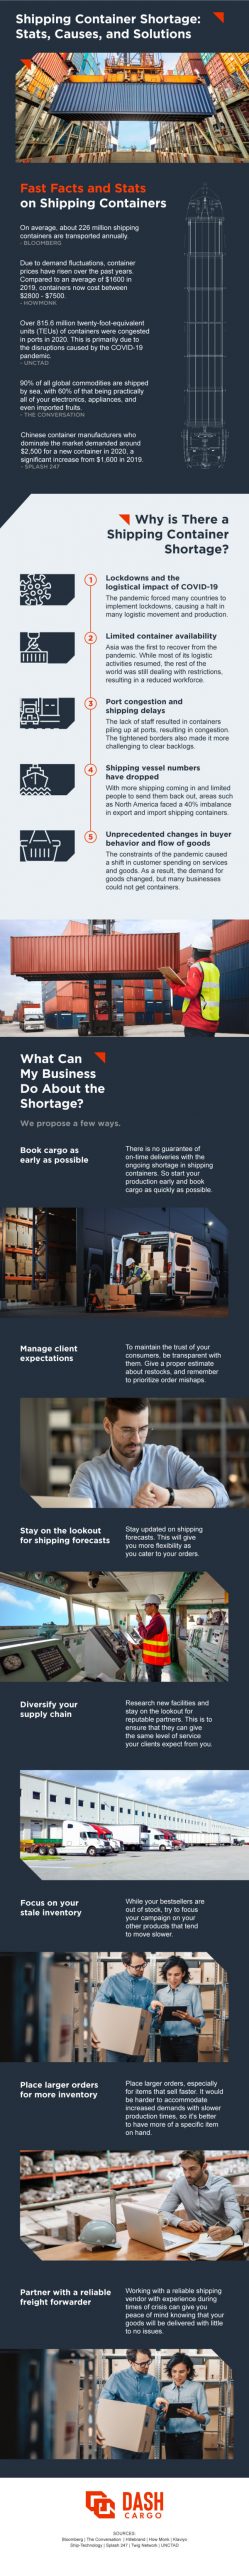 dash cargo infographic shipping container shortage